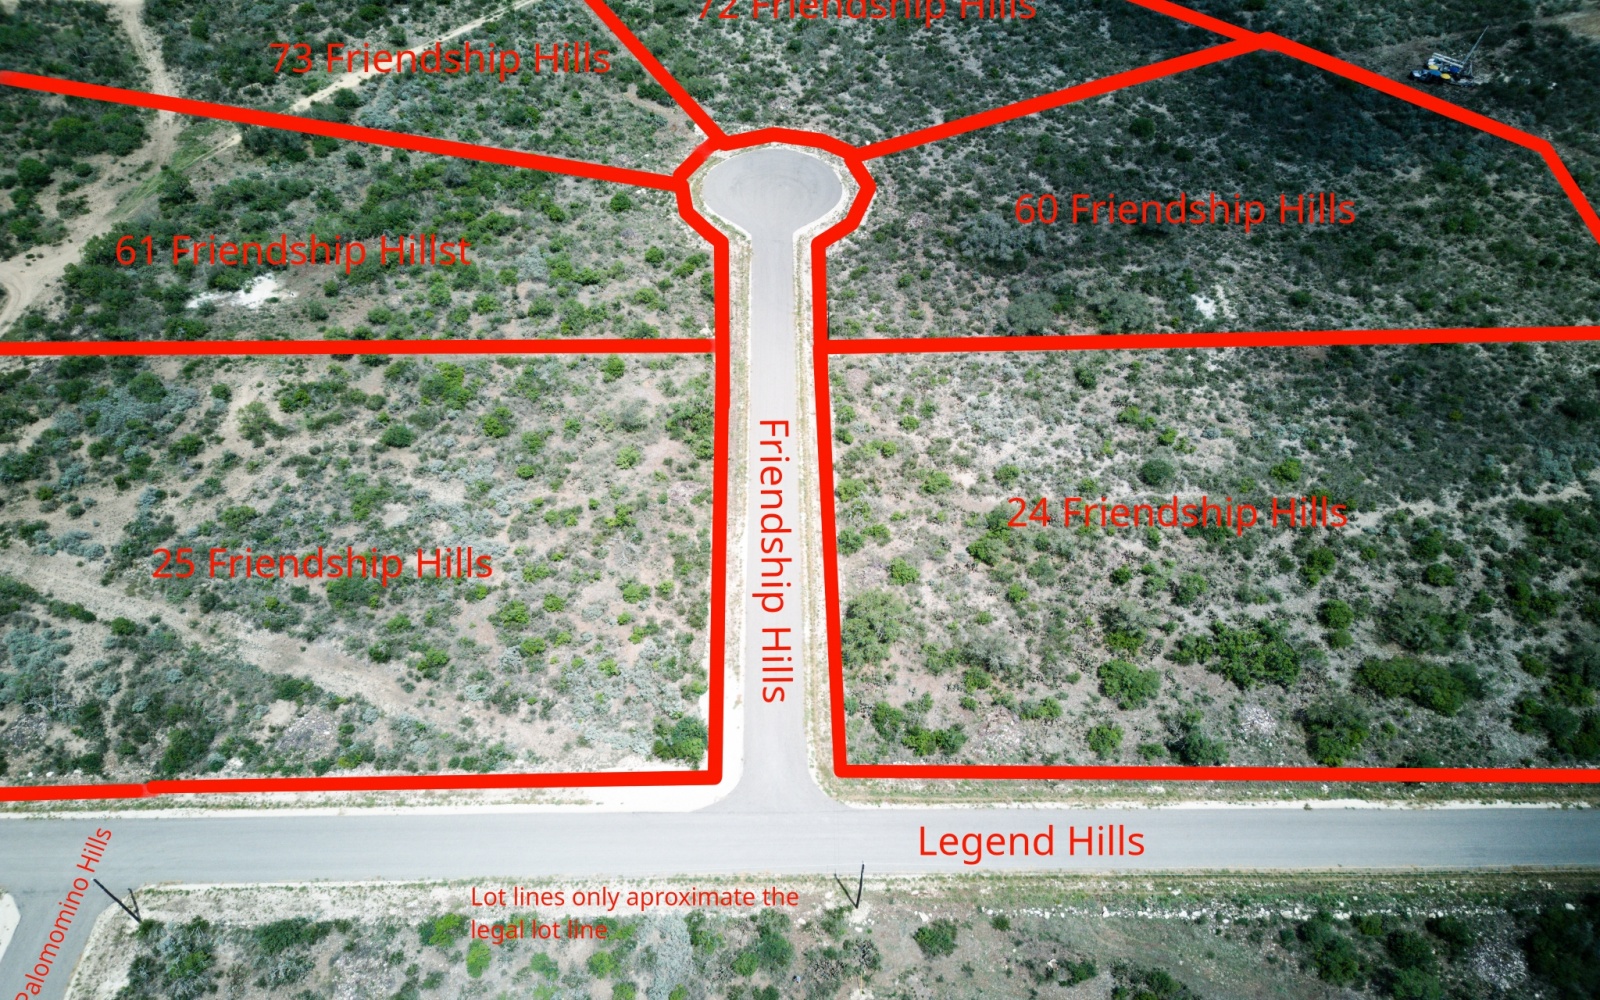 24 Friendship Hills, Uvalde, 78801, ,Land,For sale,Friendship Hills,1085